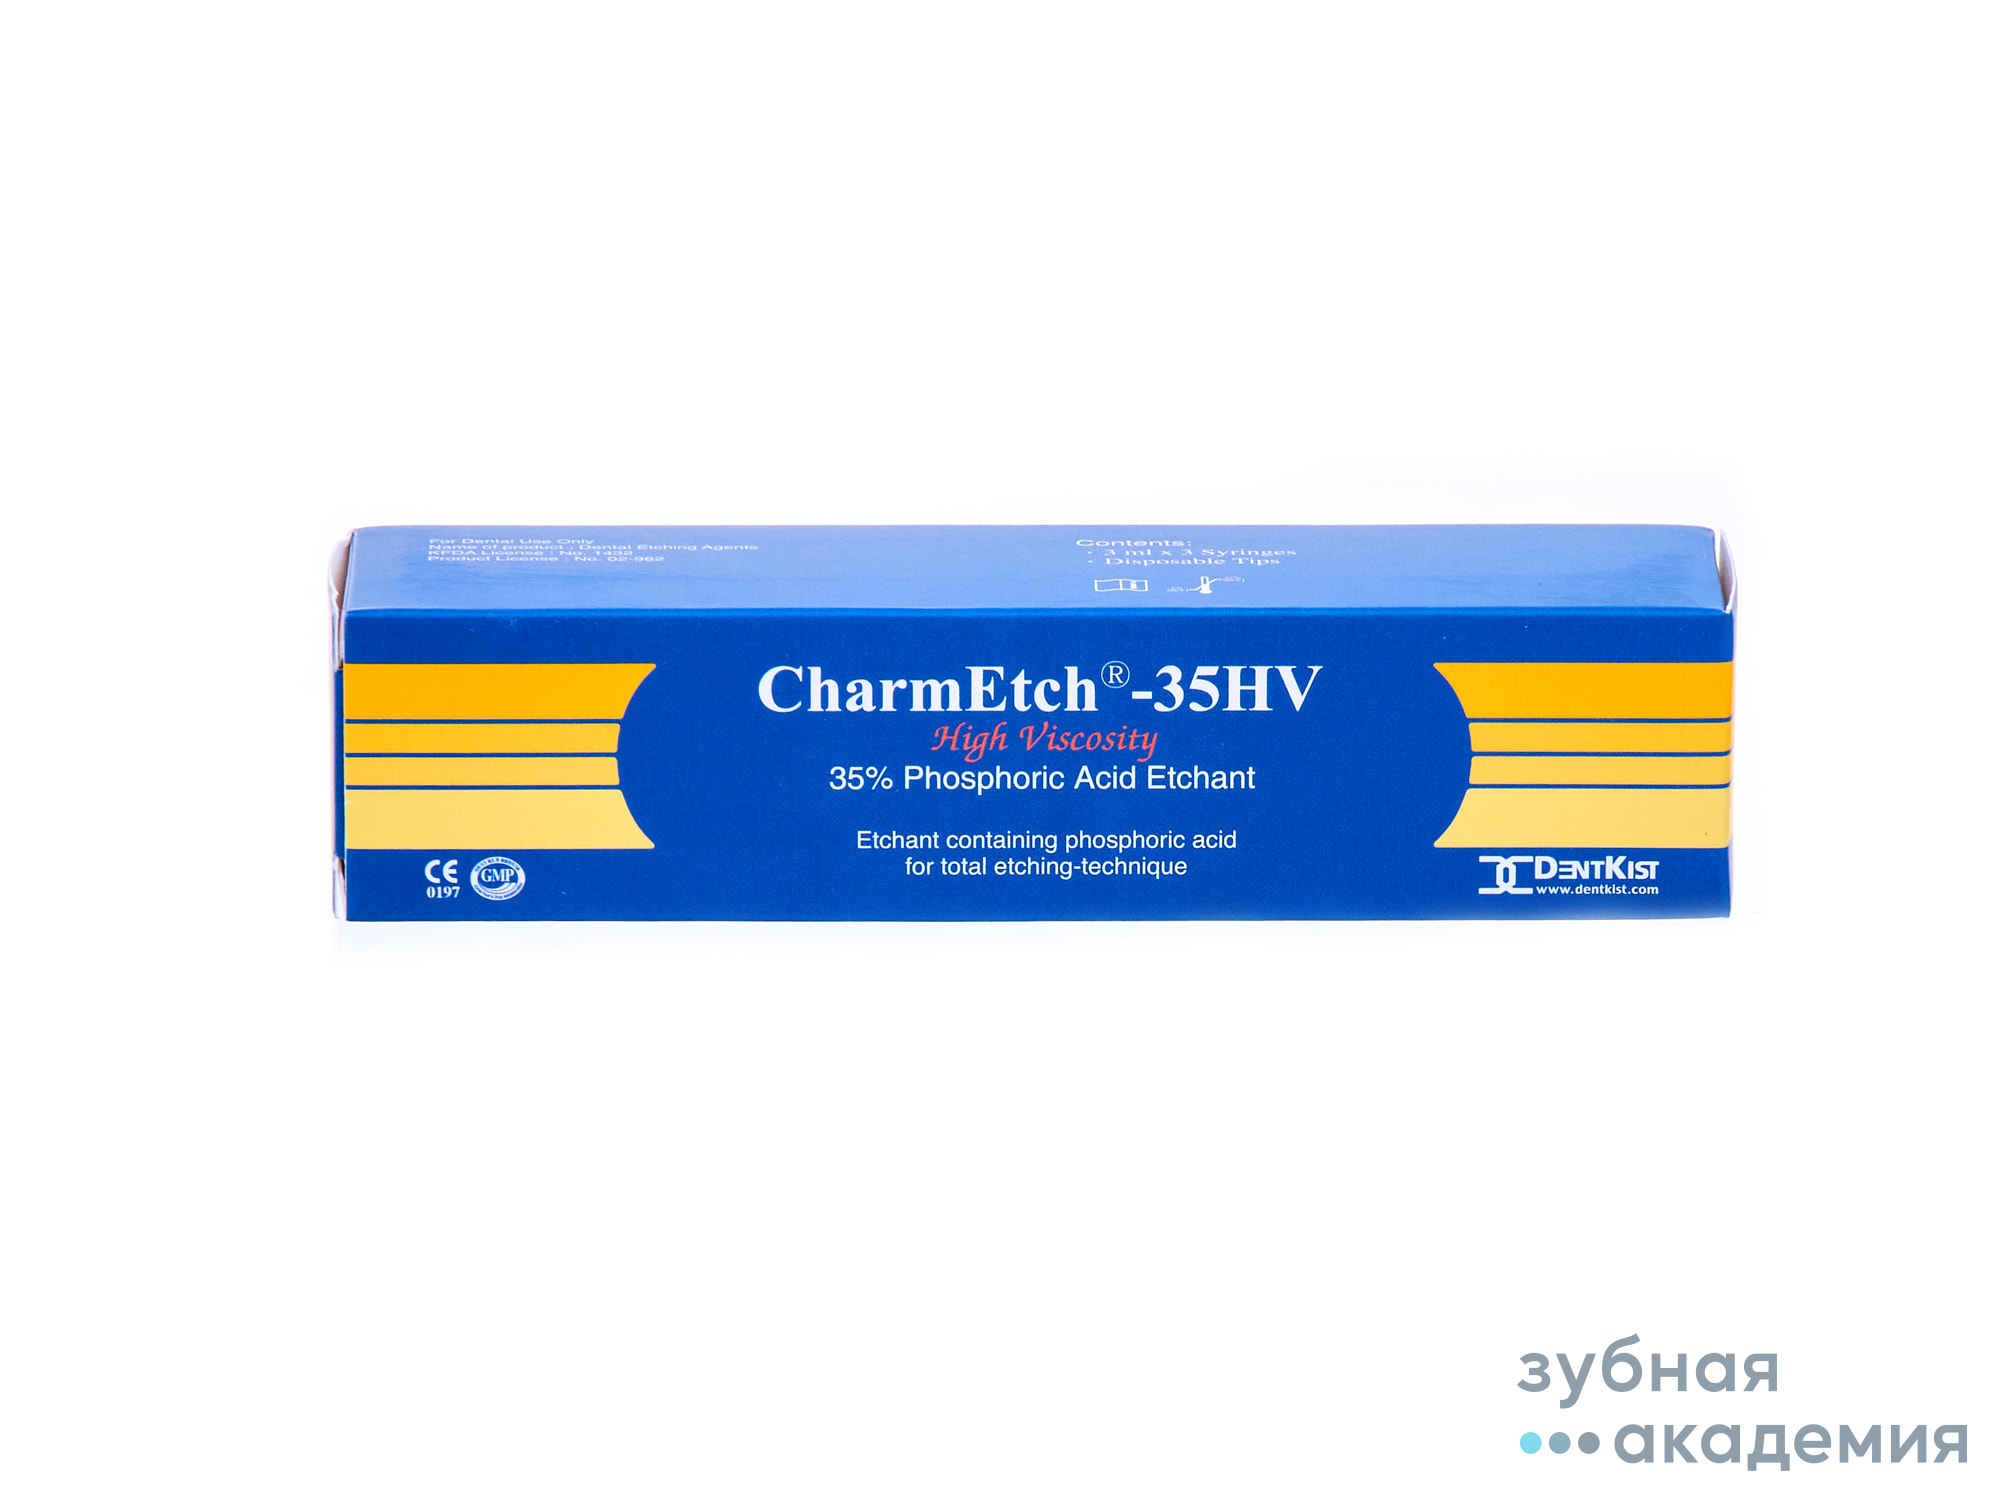 CharmEtch 35% HV /ЧамЭтч 35% HV гель протравочный упак 3*3 мл/DentKist, Корея.